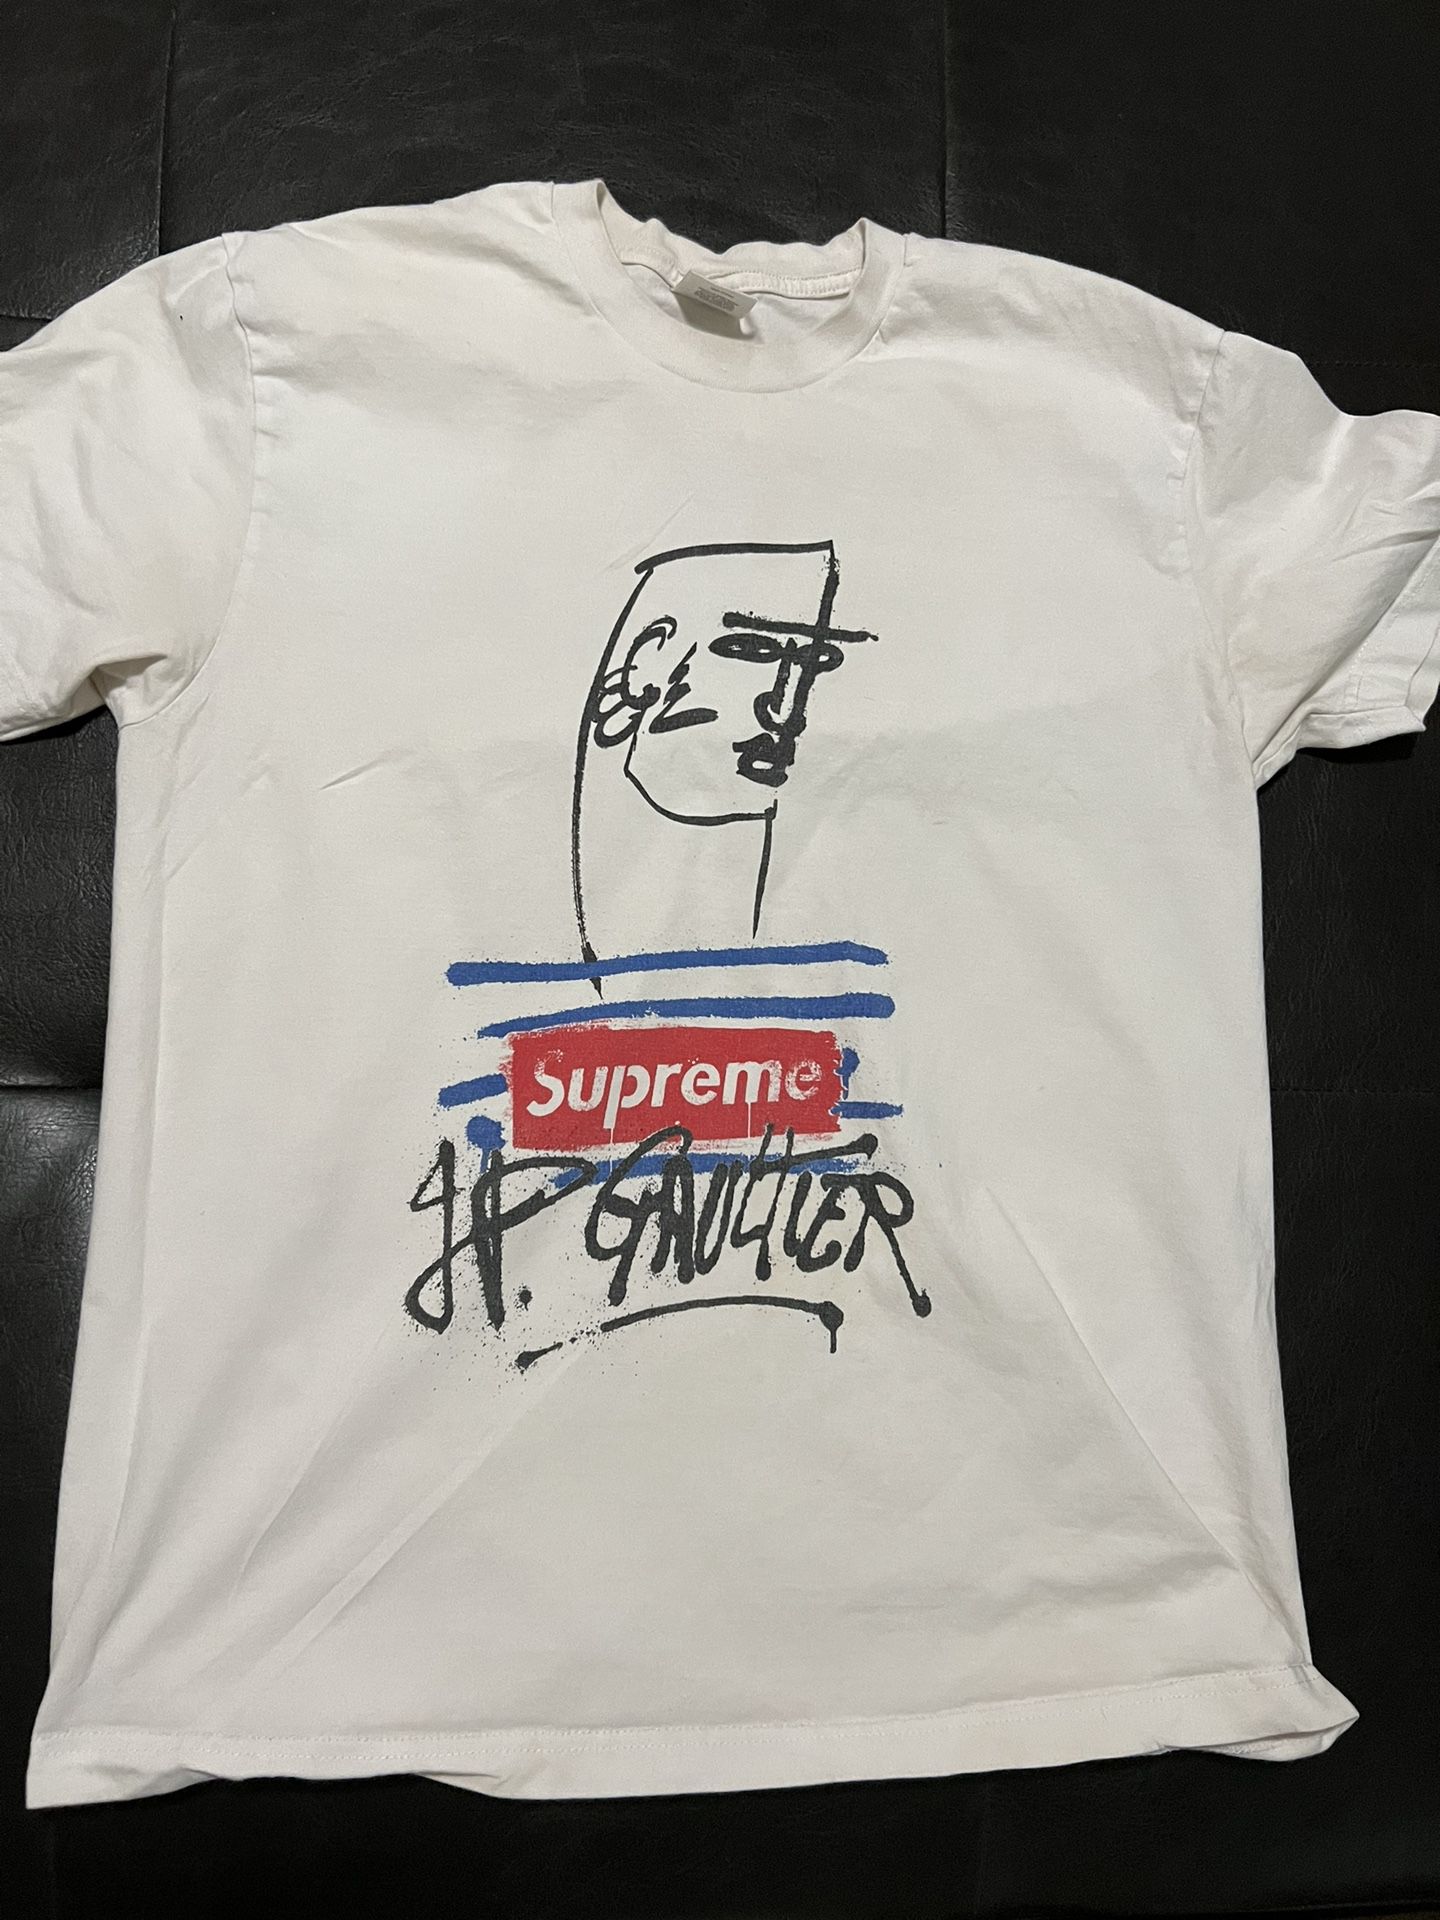 Supreme Jean Paul Gaultier Shirt